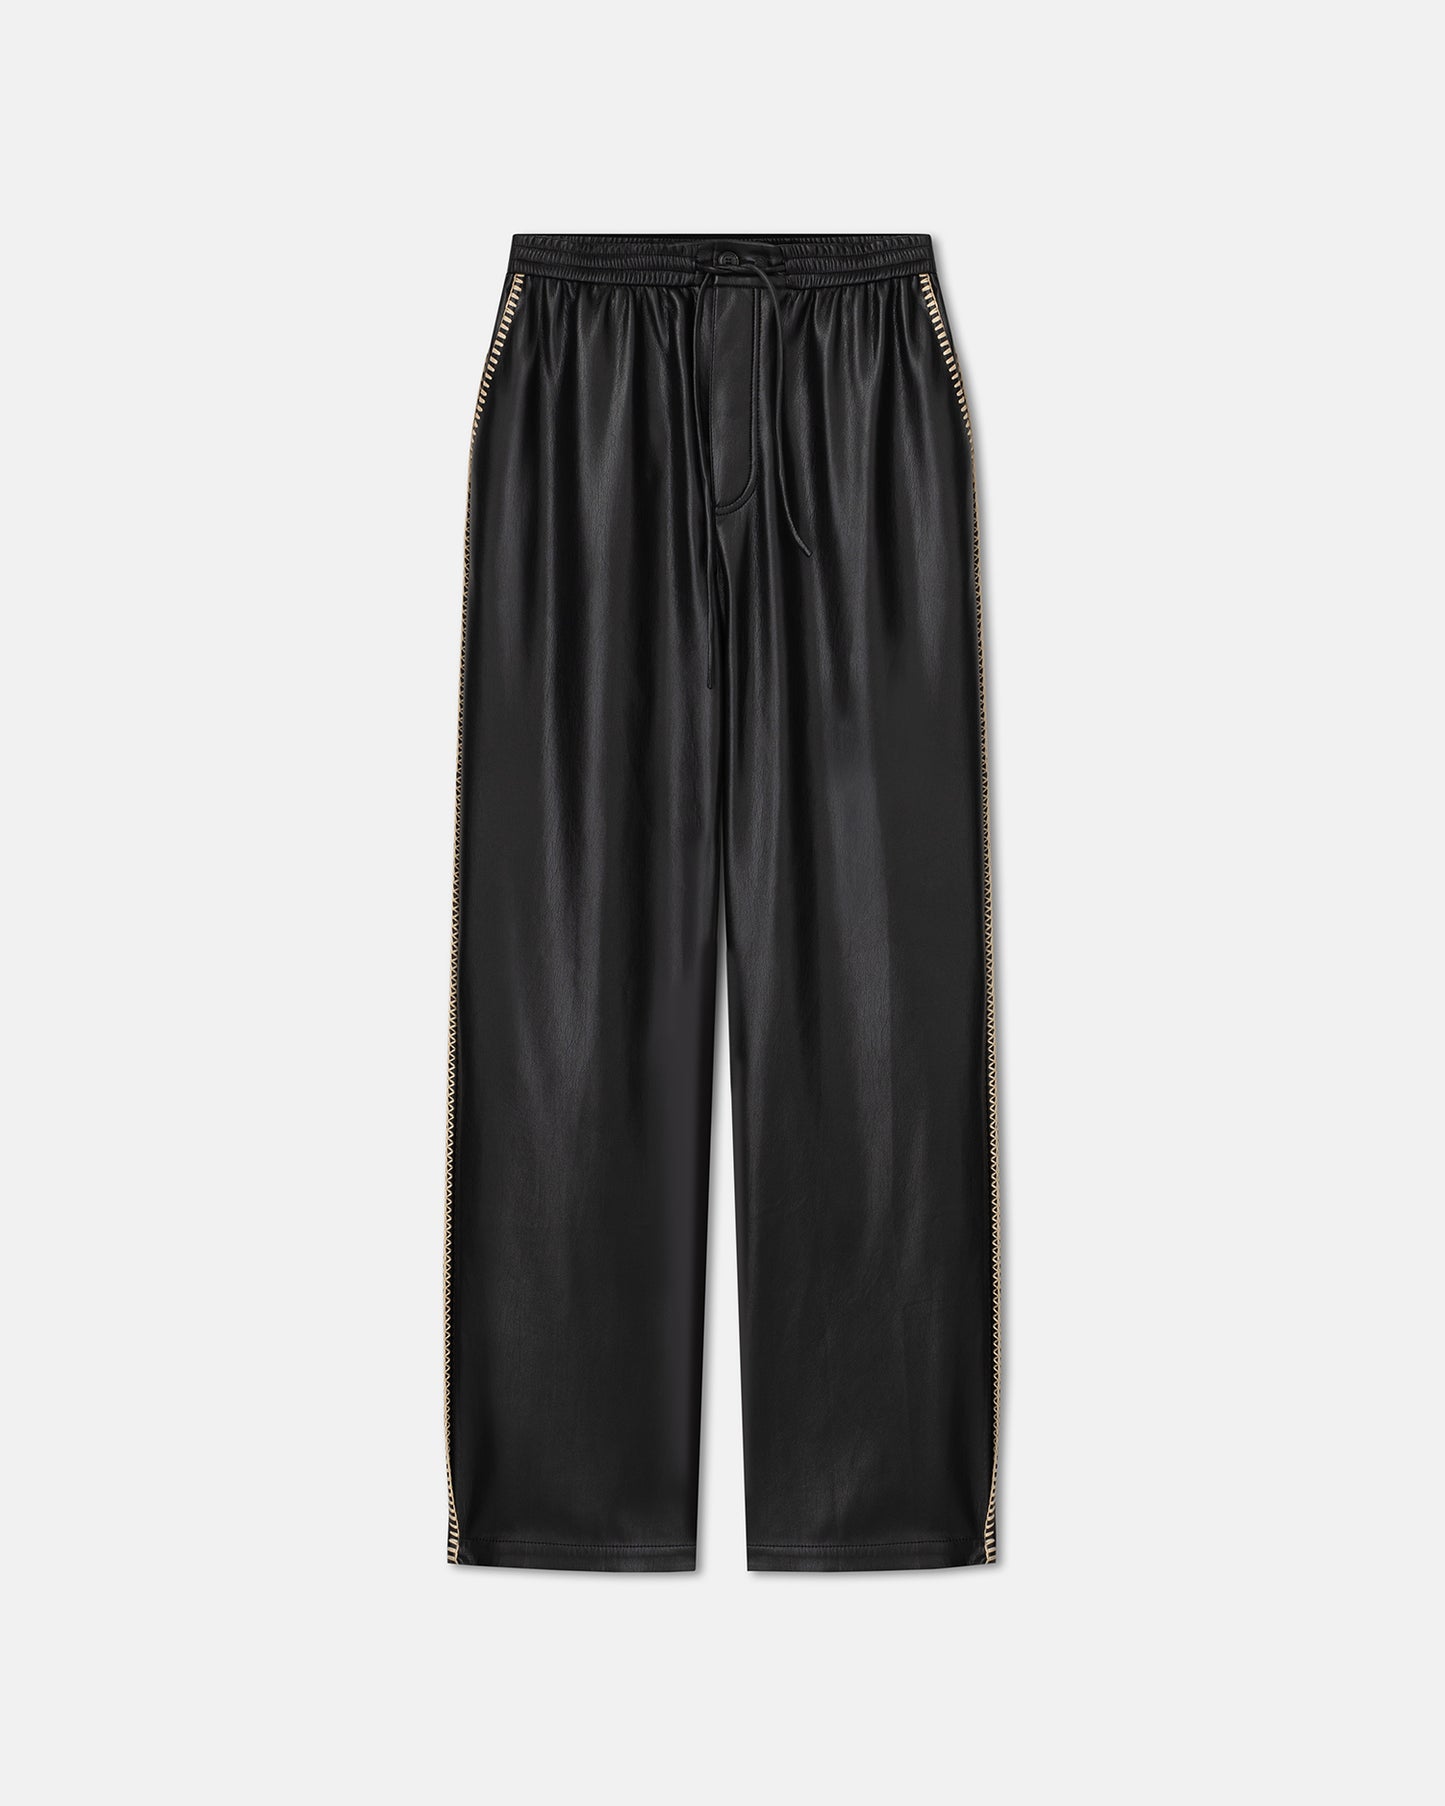 Ceron - Raffia-Trimmed Okobor™ Alt-Leather Pants - Black